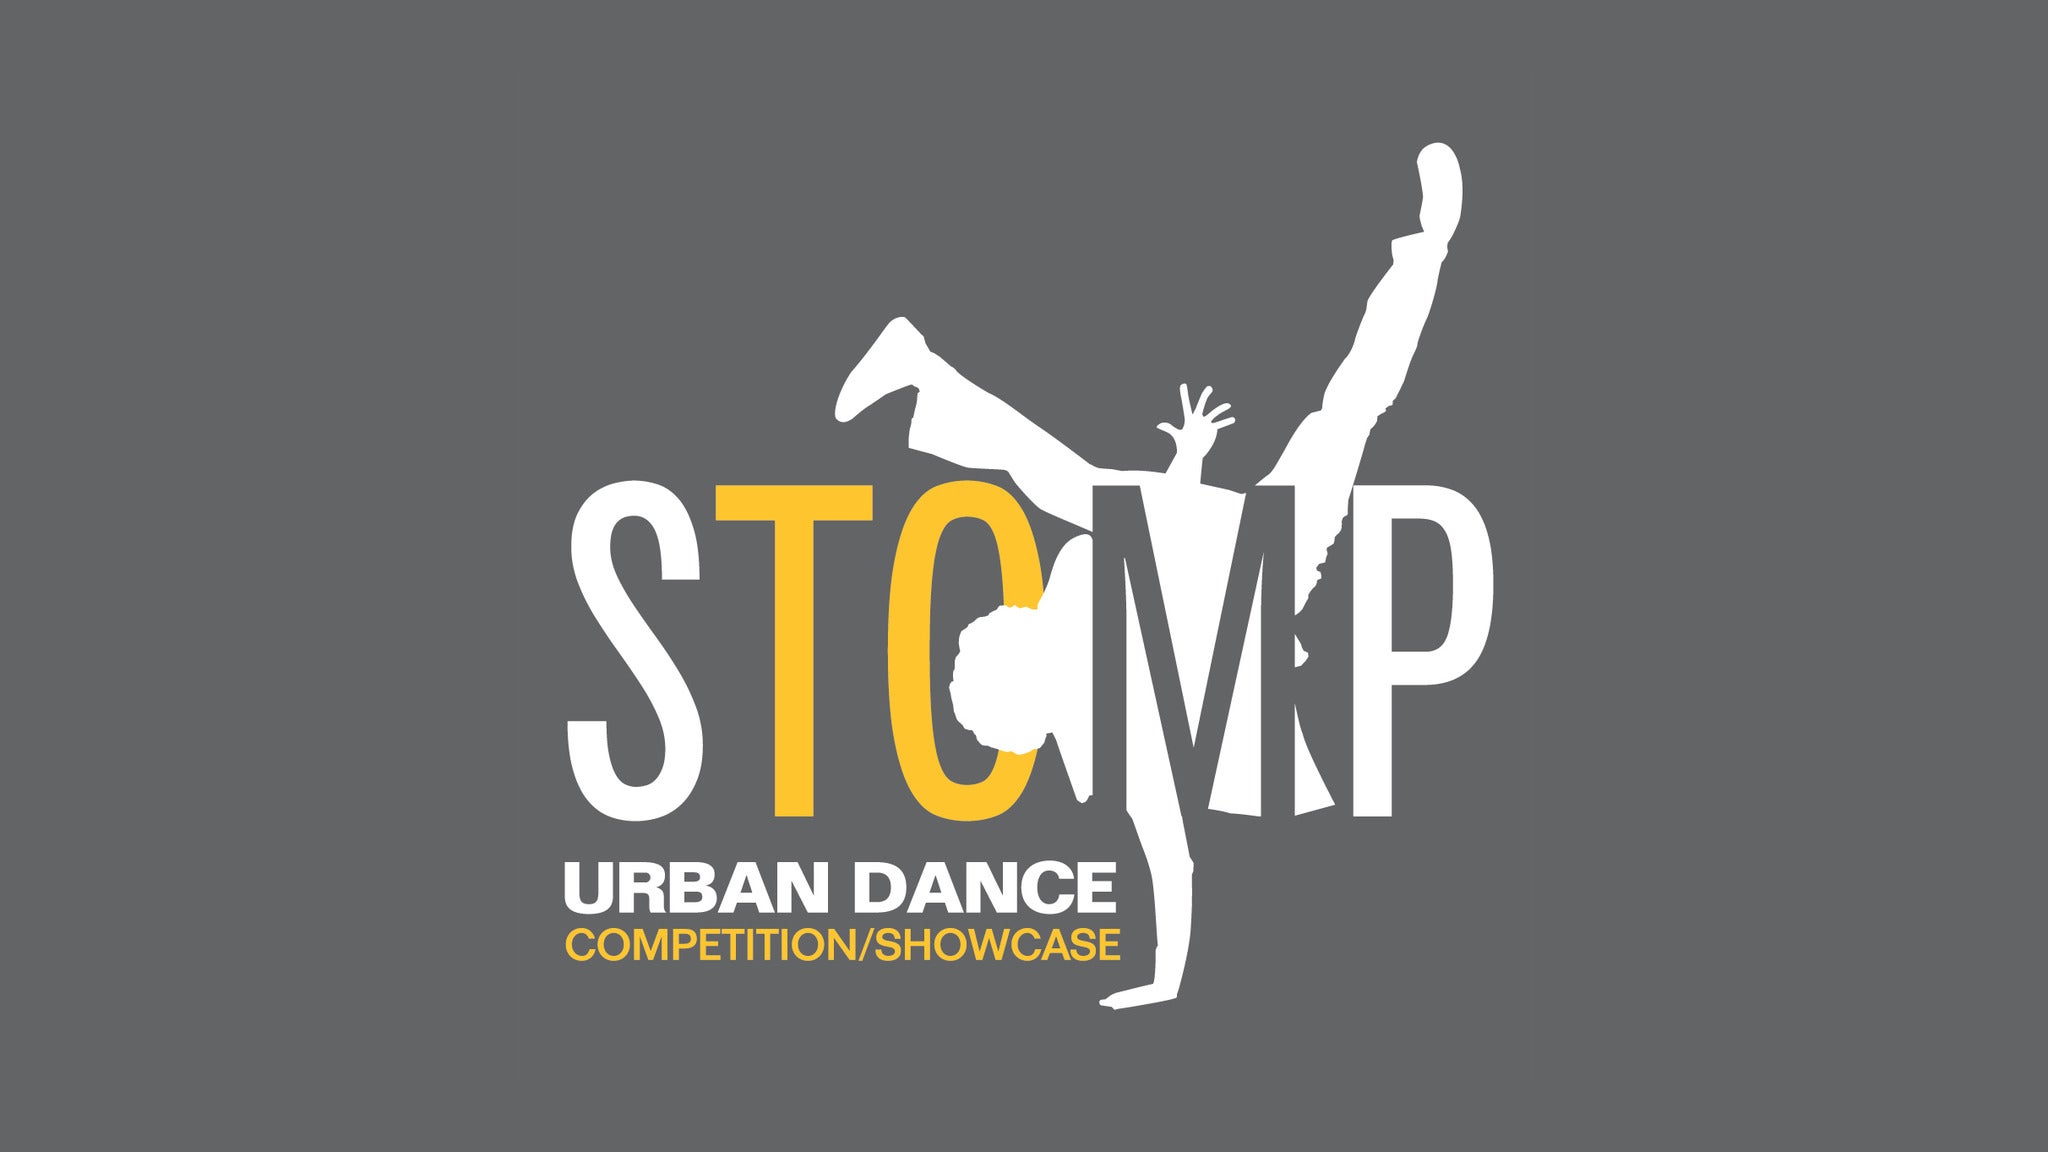 Stomp Urban Dance Competition presale information on freepresalepasswords.com